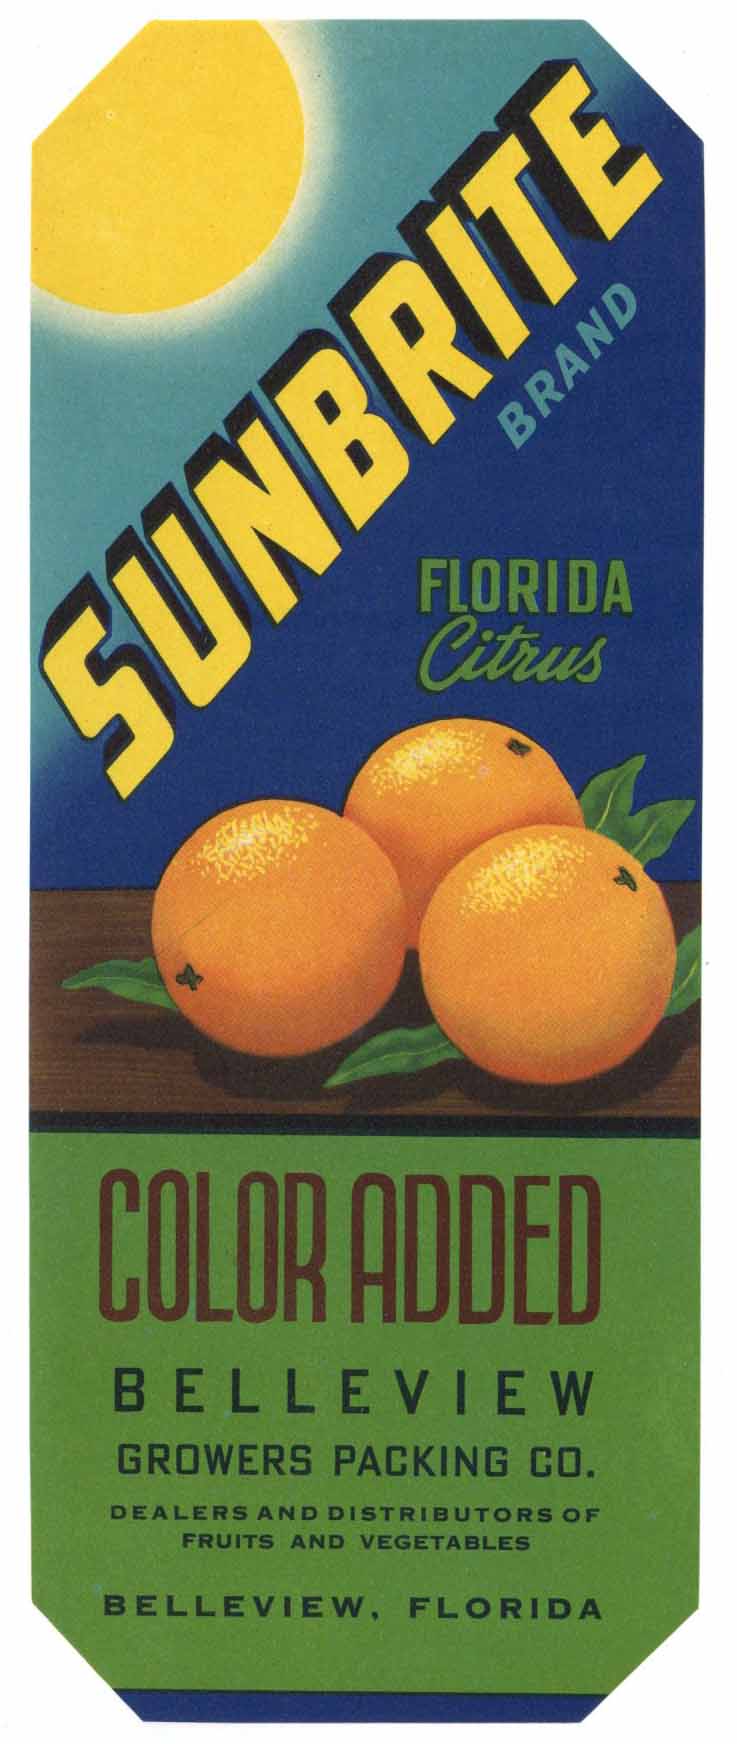 Sunbrite Brand Vintage Belleview Florida Citrus Crate Label, str